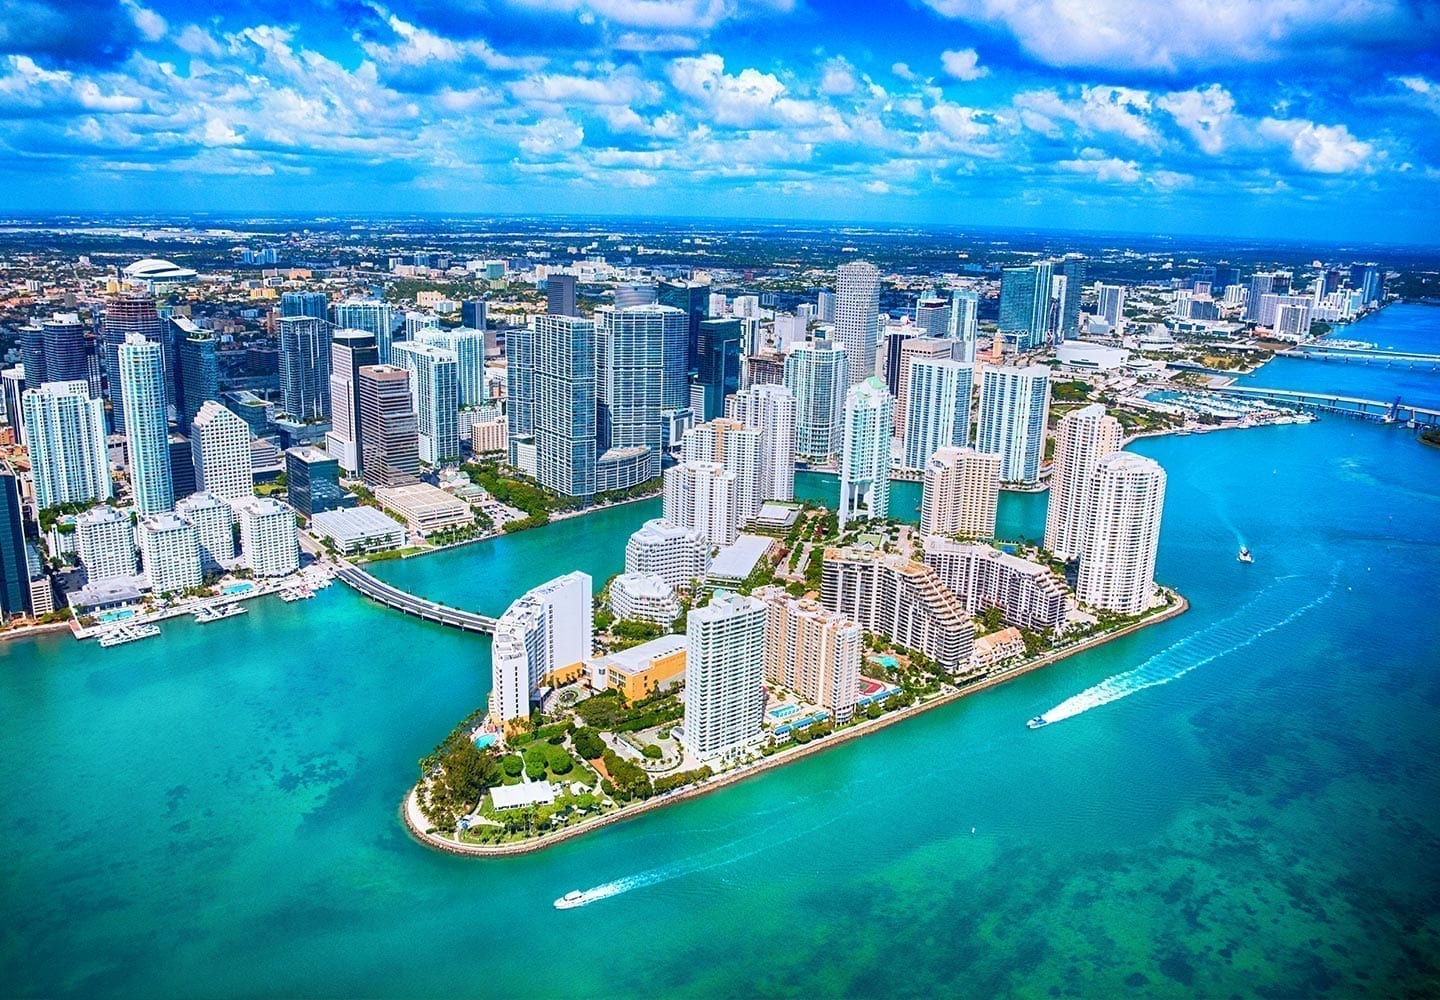 Miami Tech Spring : TokenSociety propose des experiences NFT